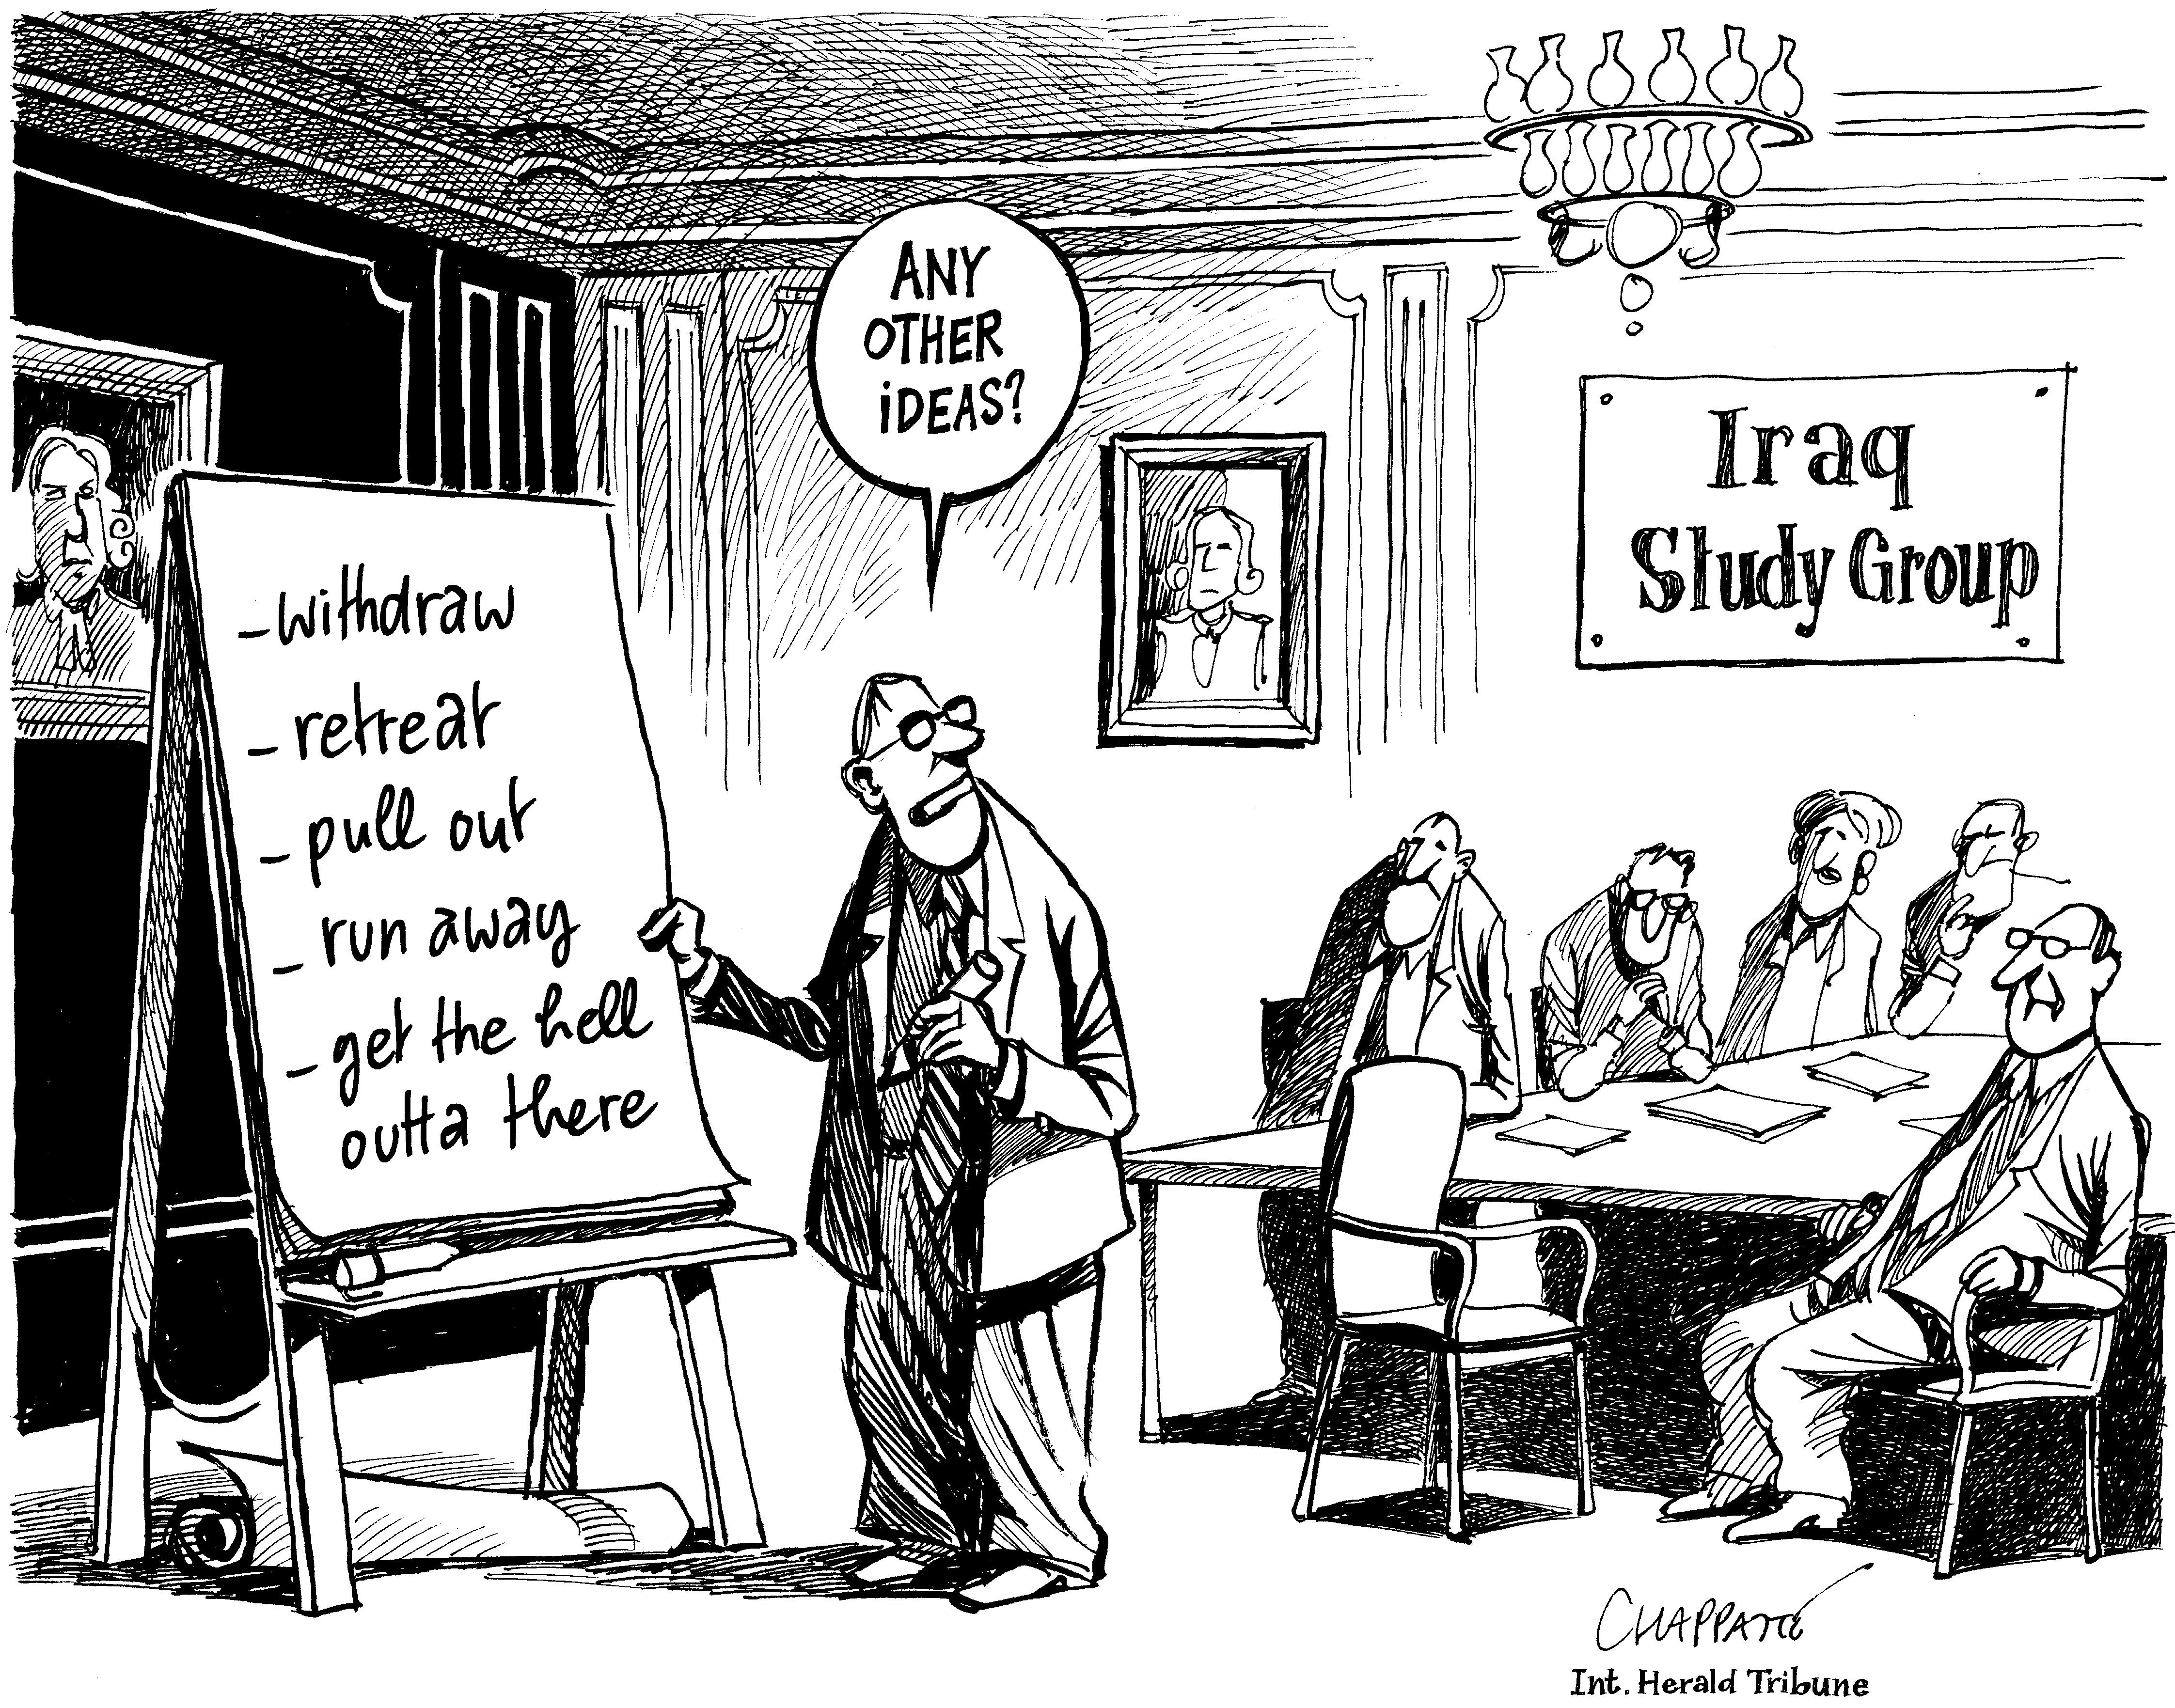 The Iraq Study Group